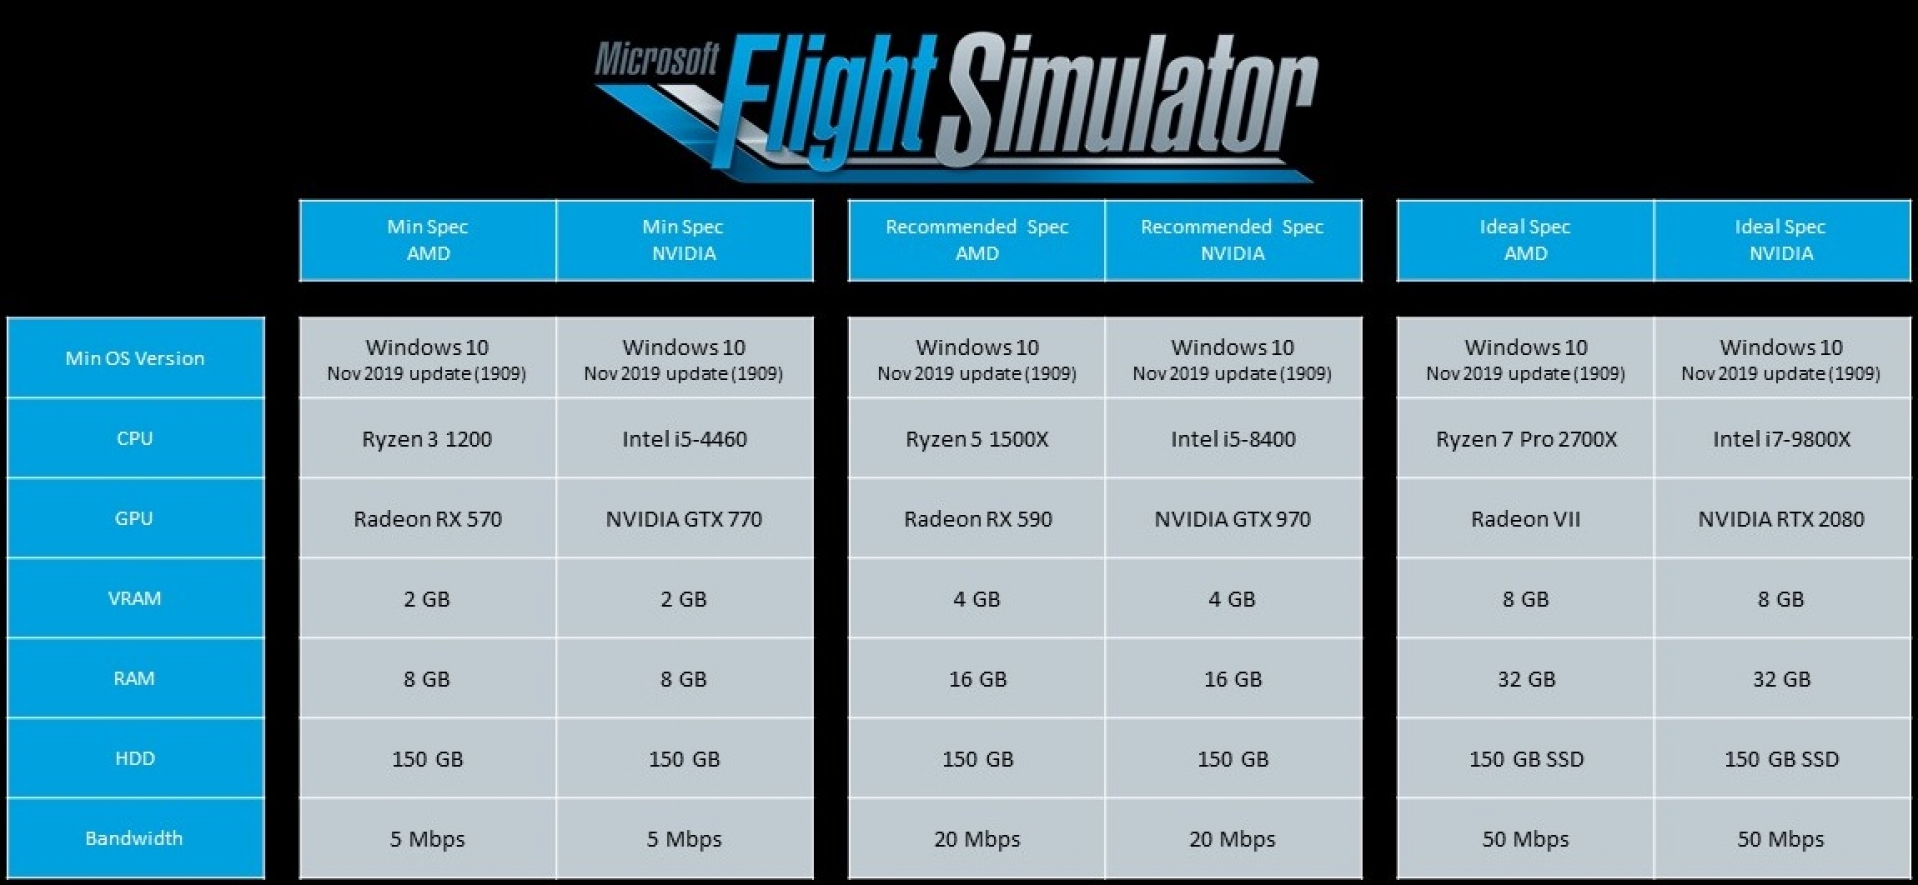 MICROSOFT FLIGHT SIMULATOR PC Build 